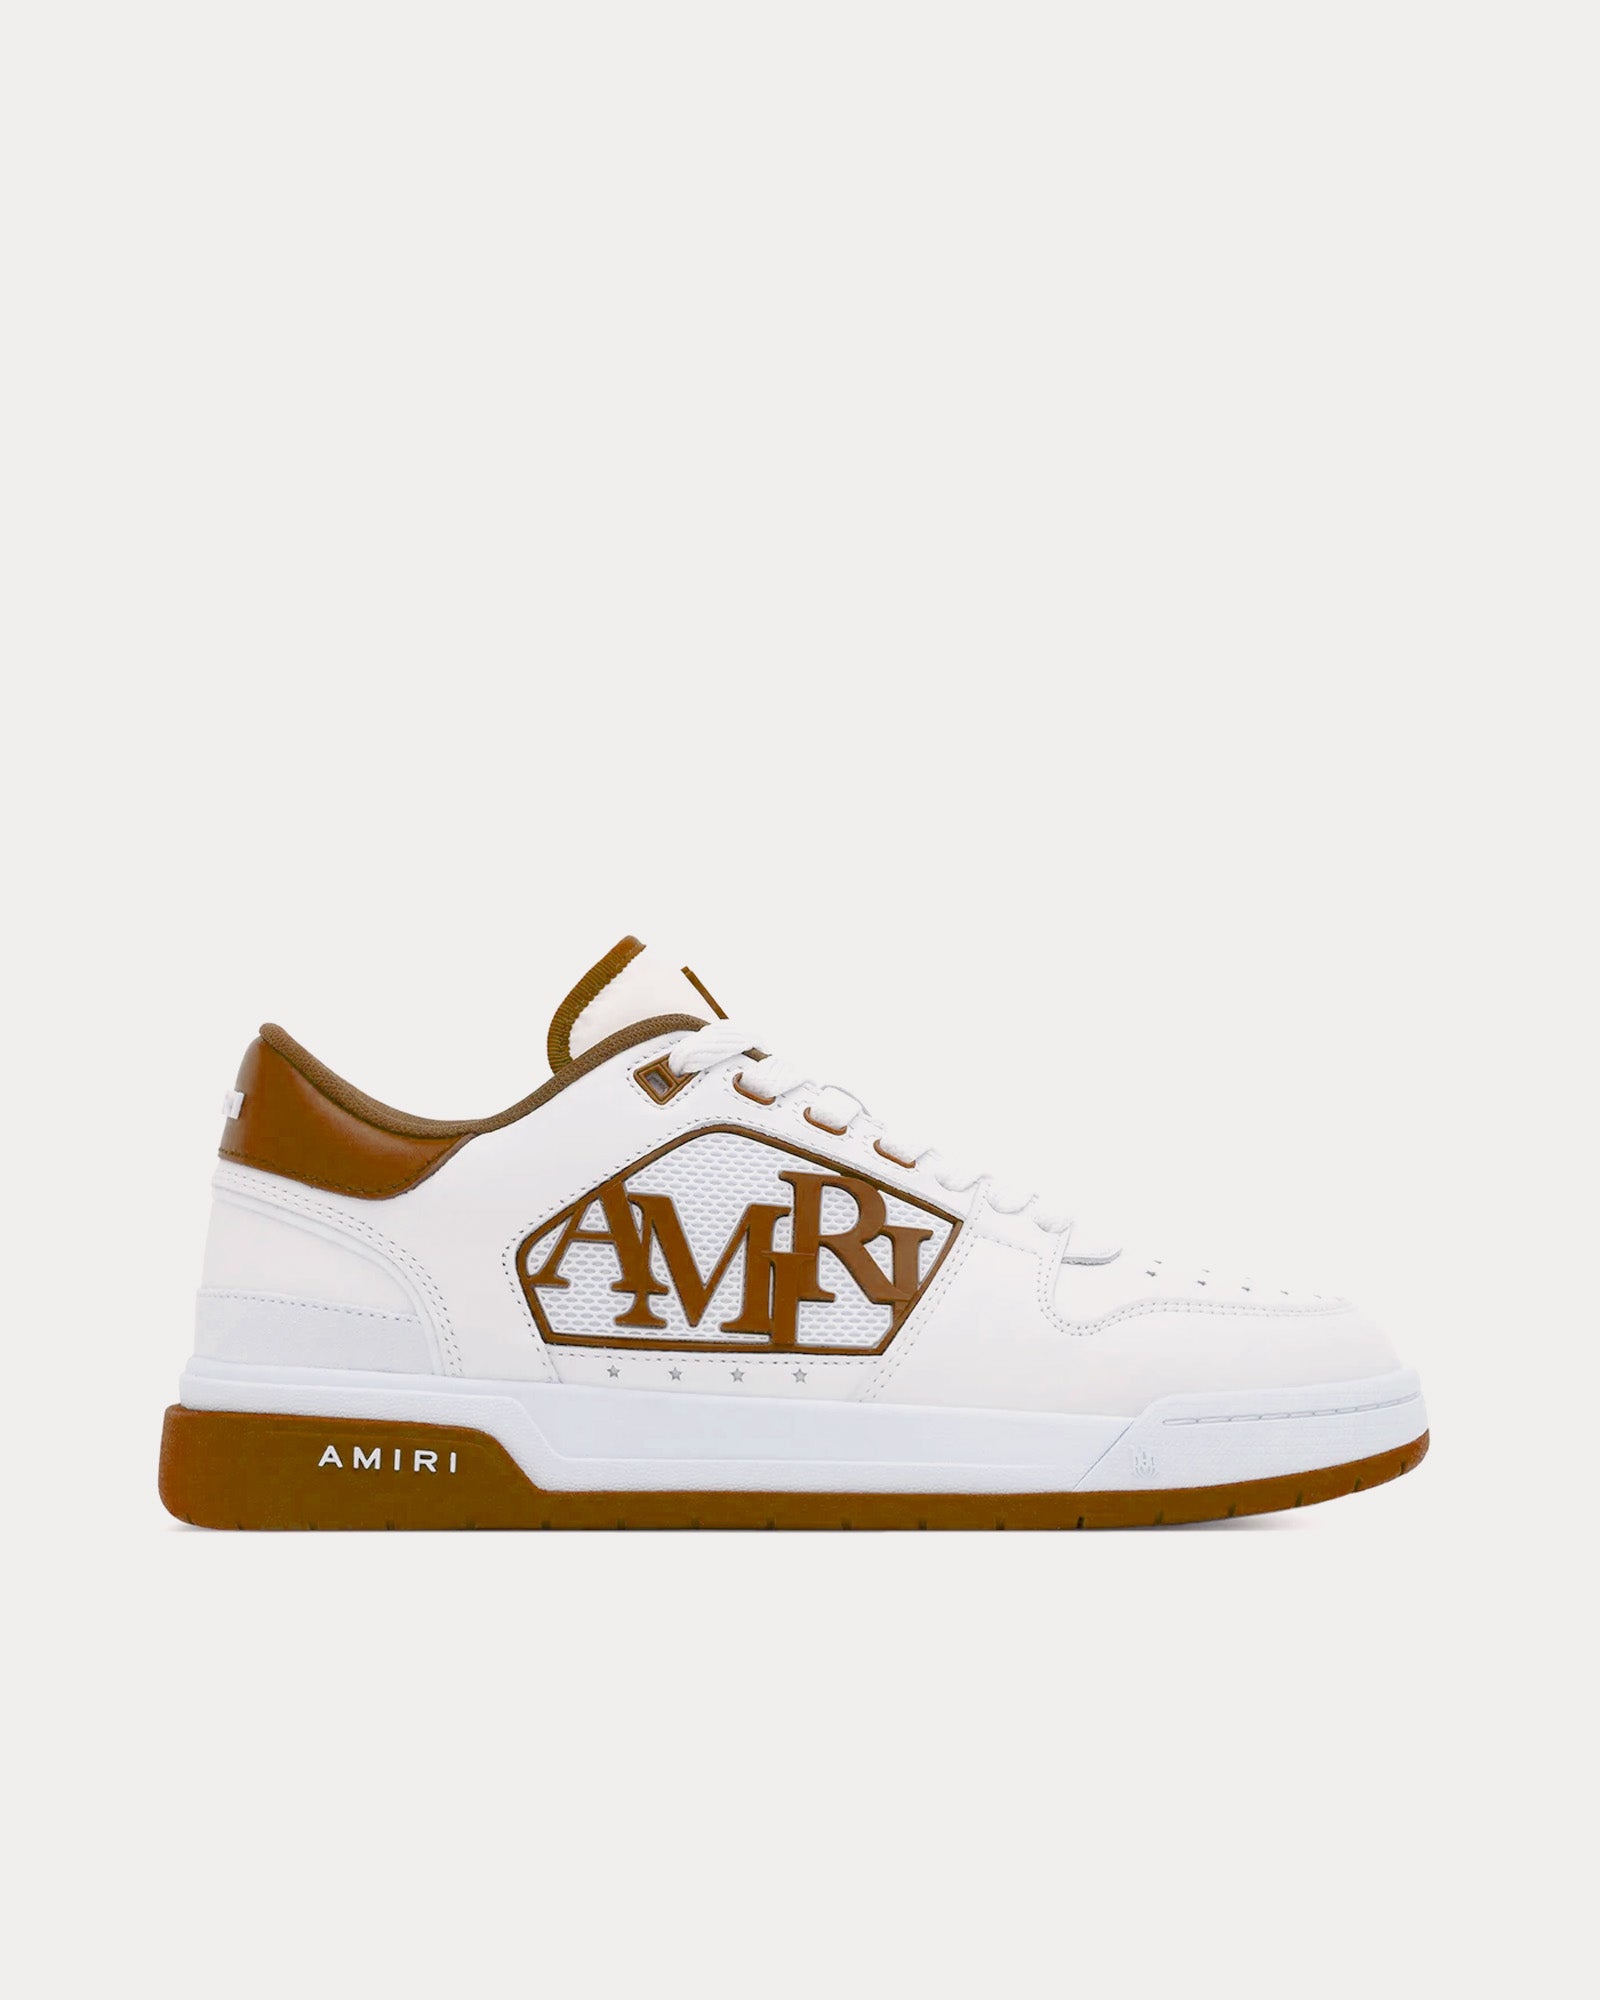 AMIRI - Classic White / Brown Low Top Sneakers